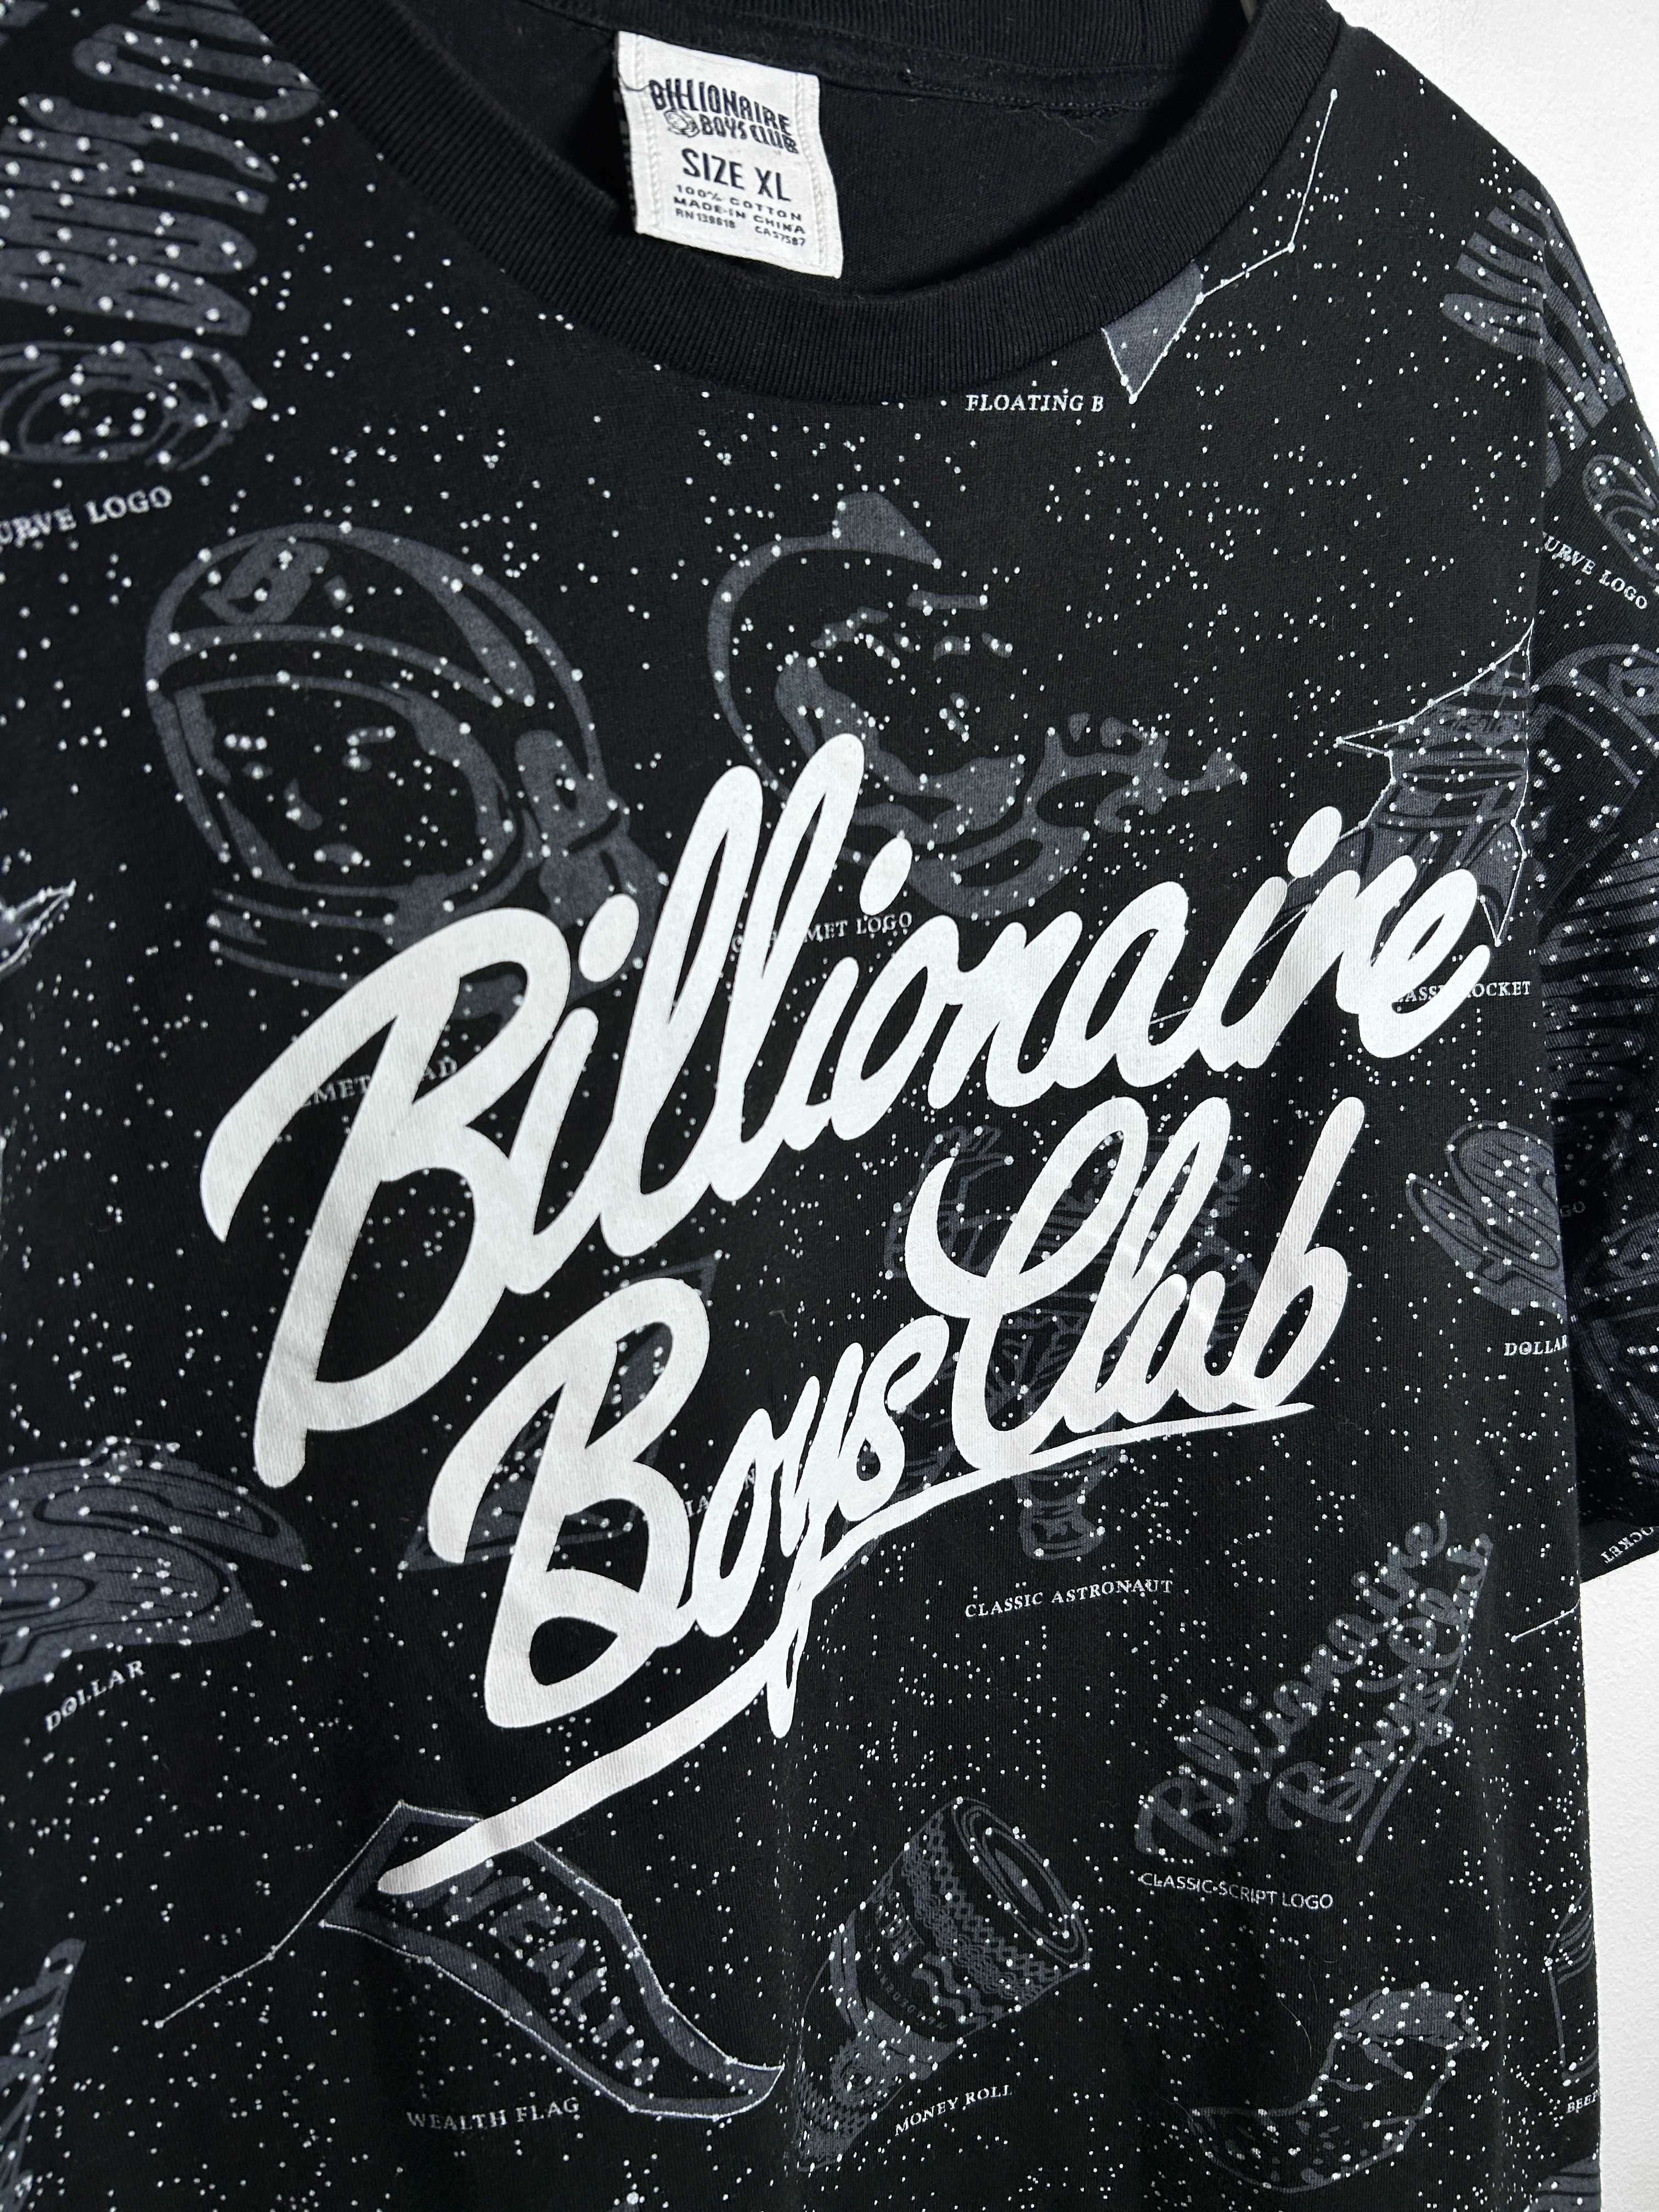 Billionaire Boys Club koszulka / Billionaire Boys Club